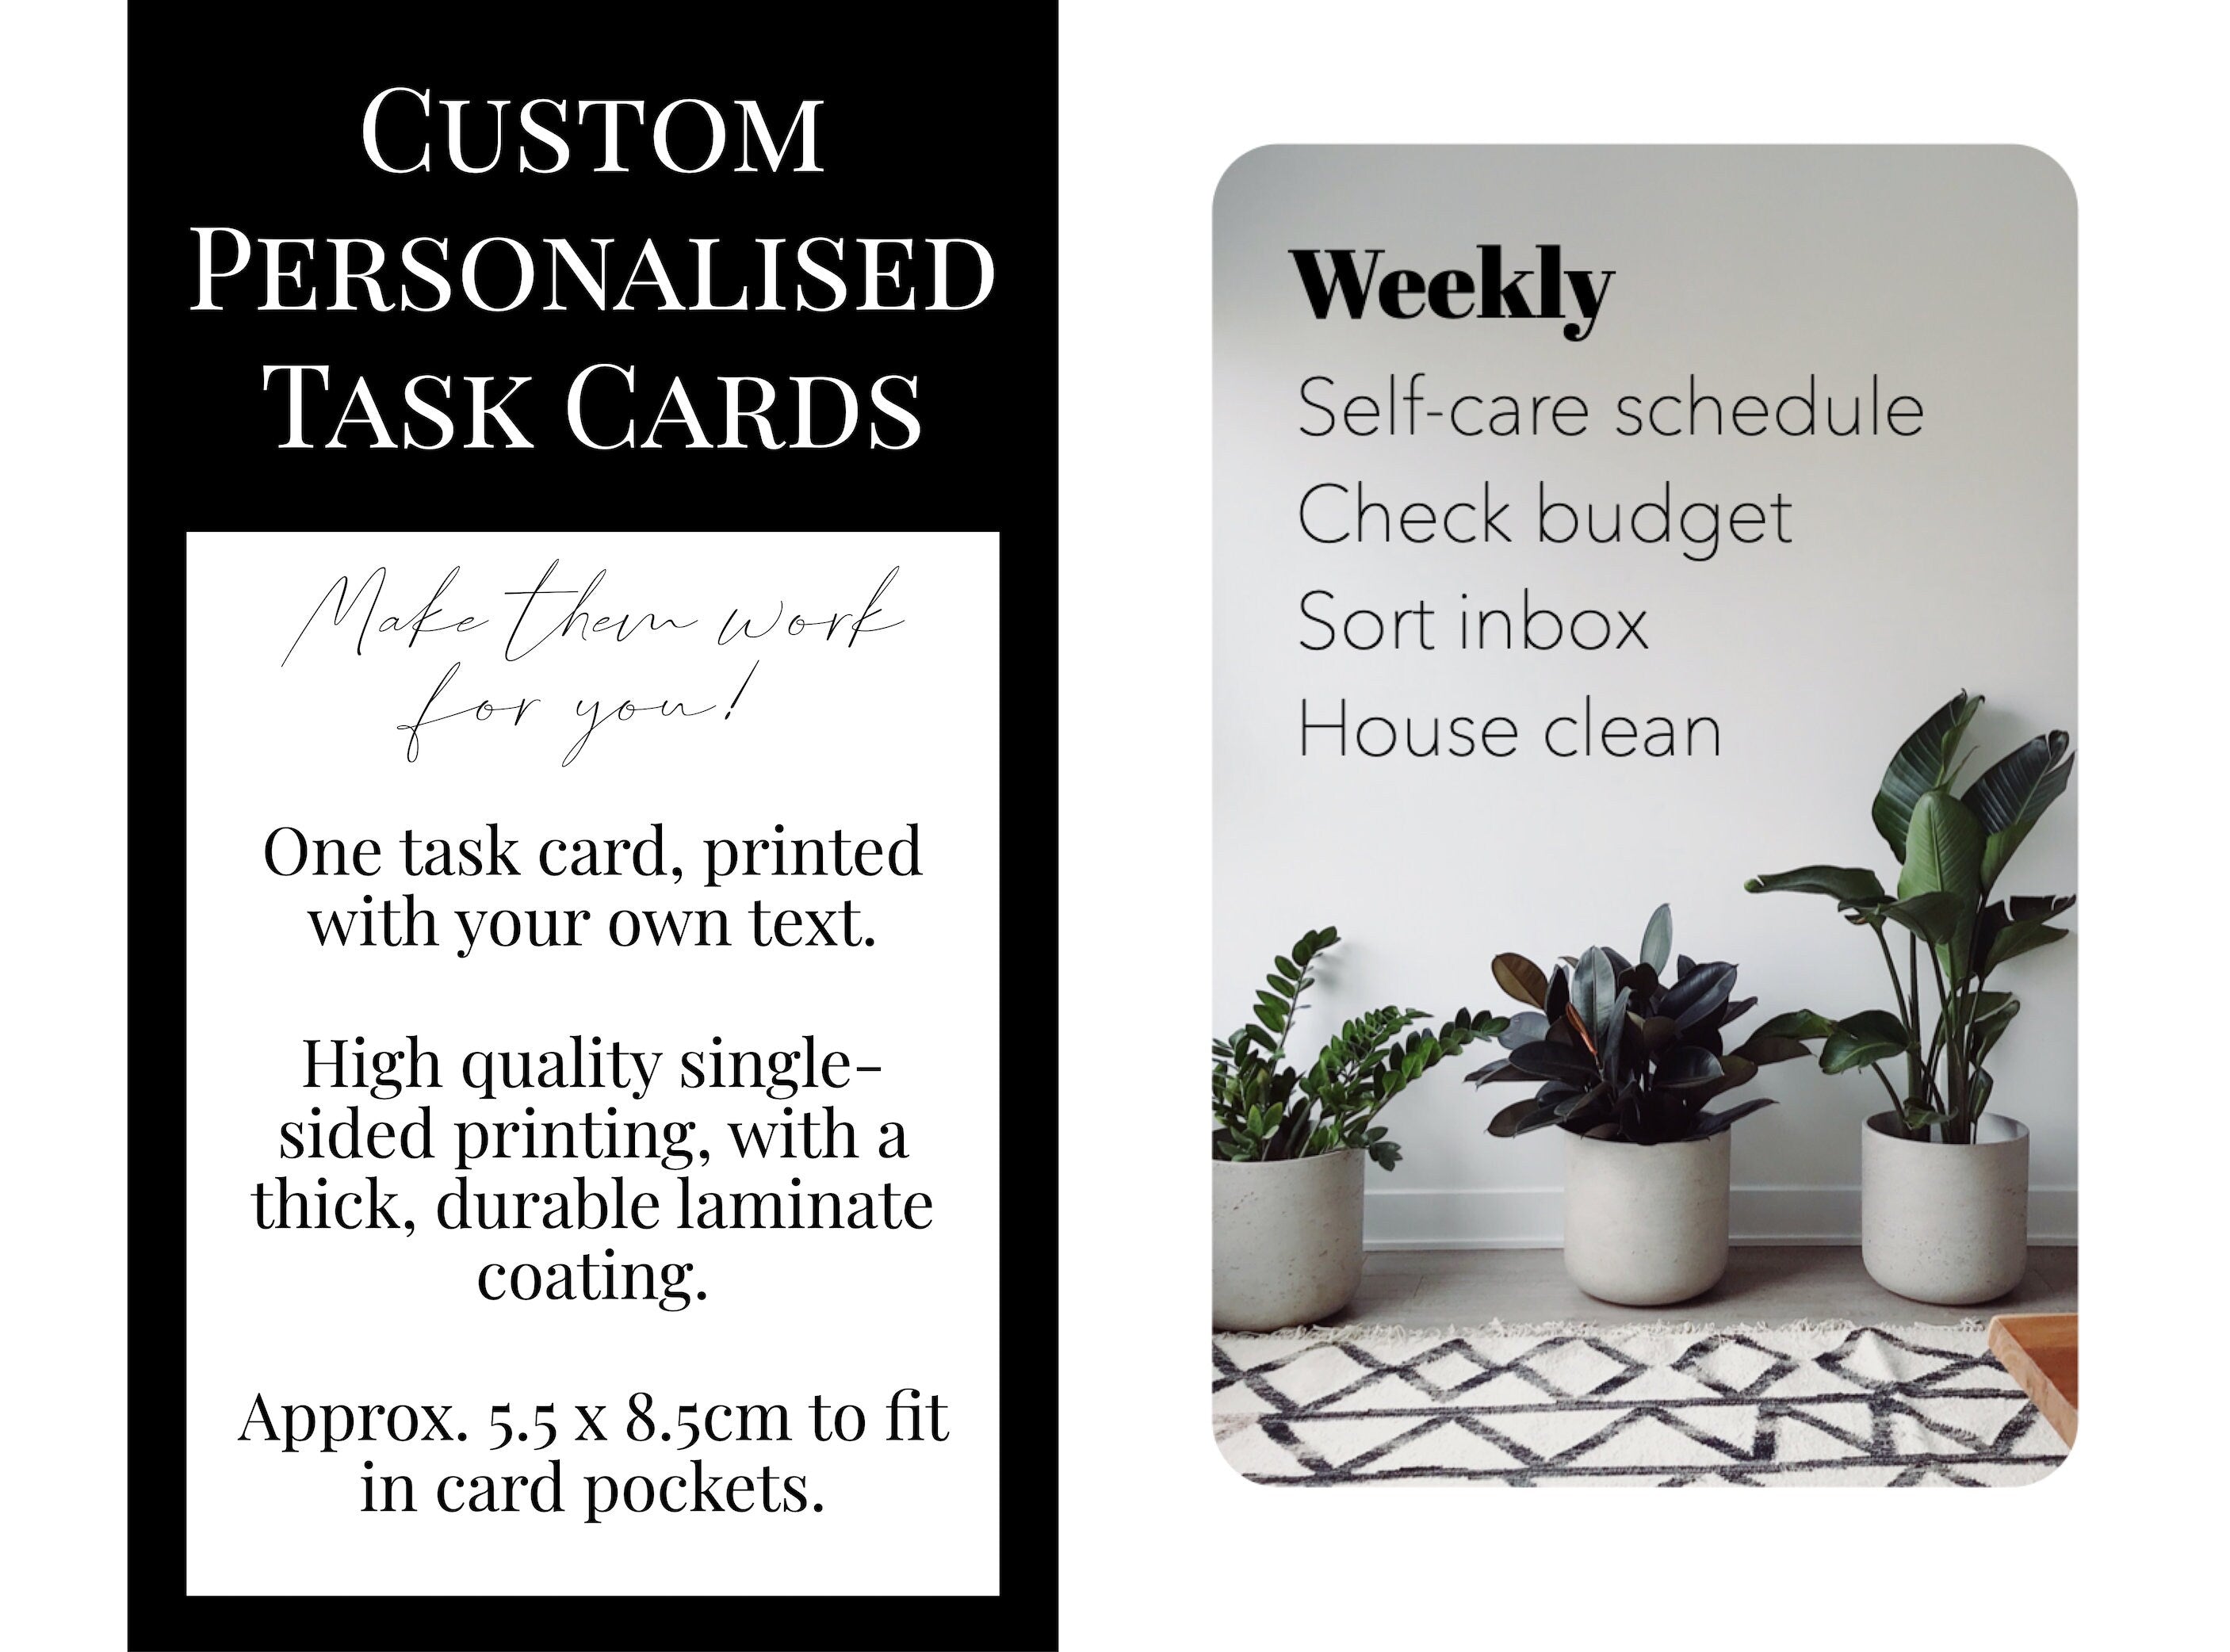 Custom Task Card - Rug and Plants